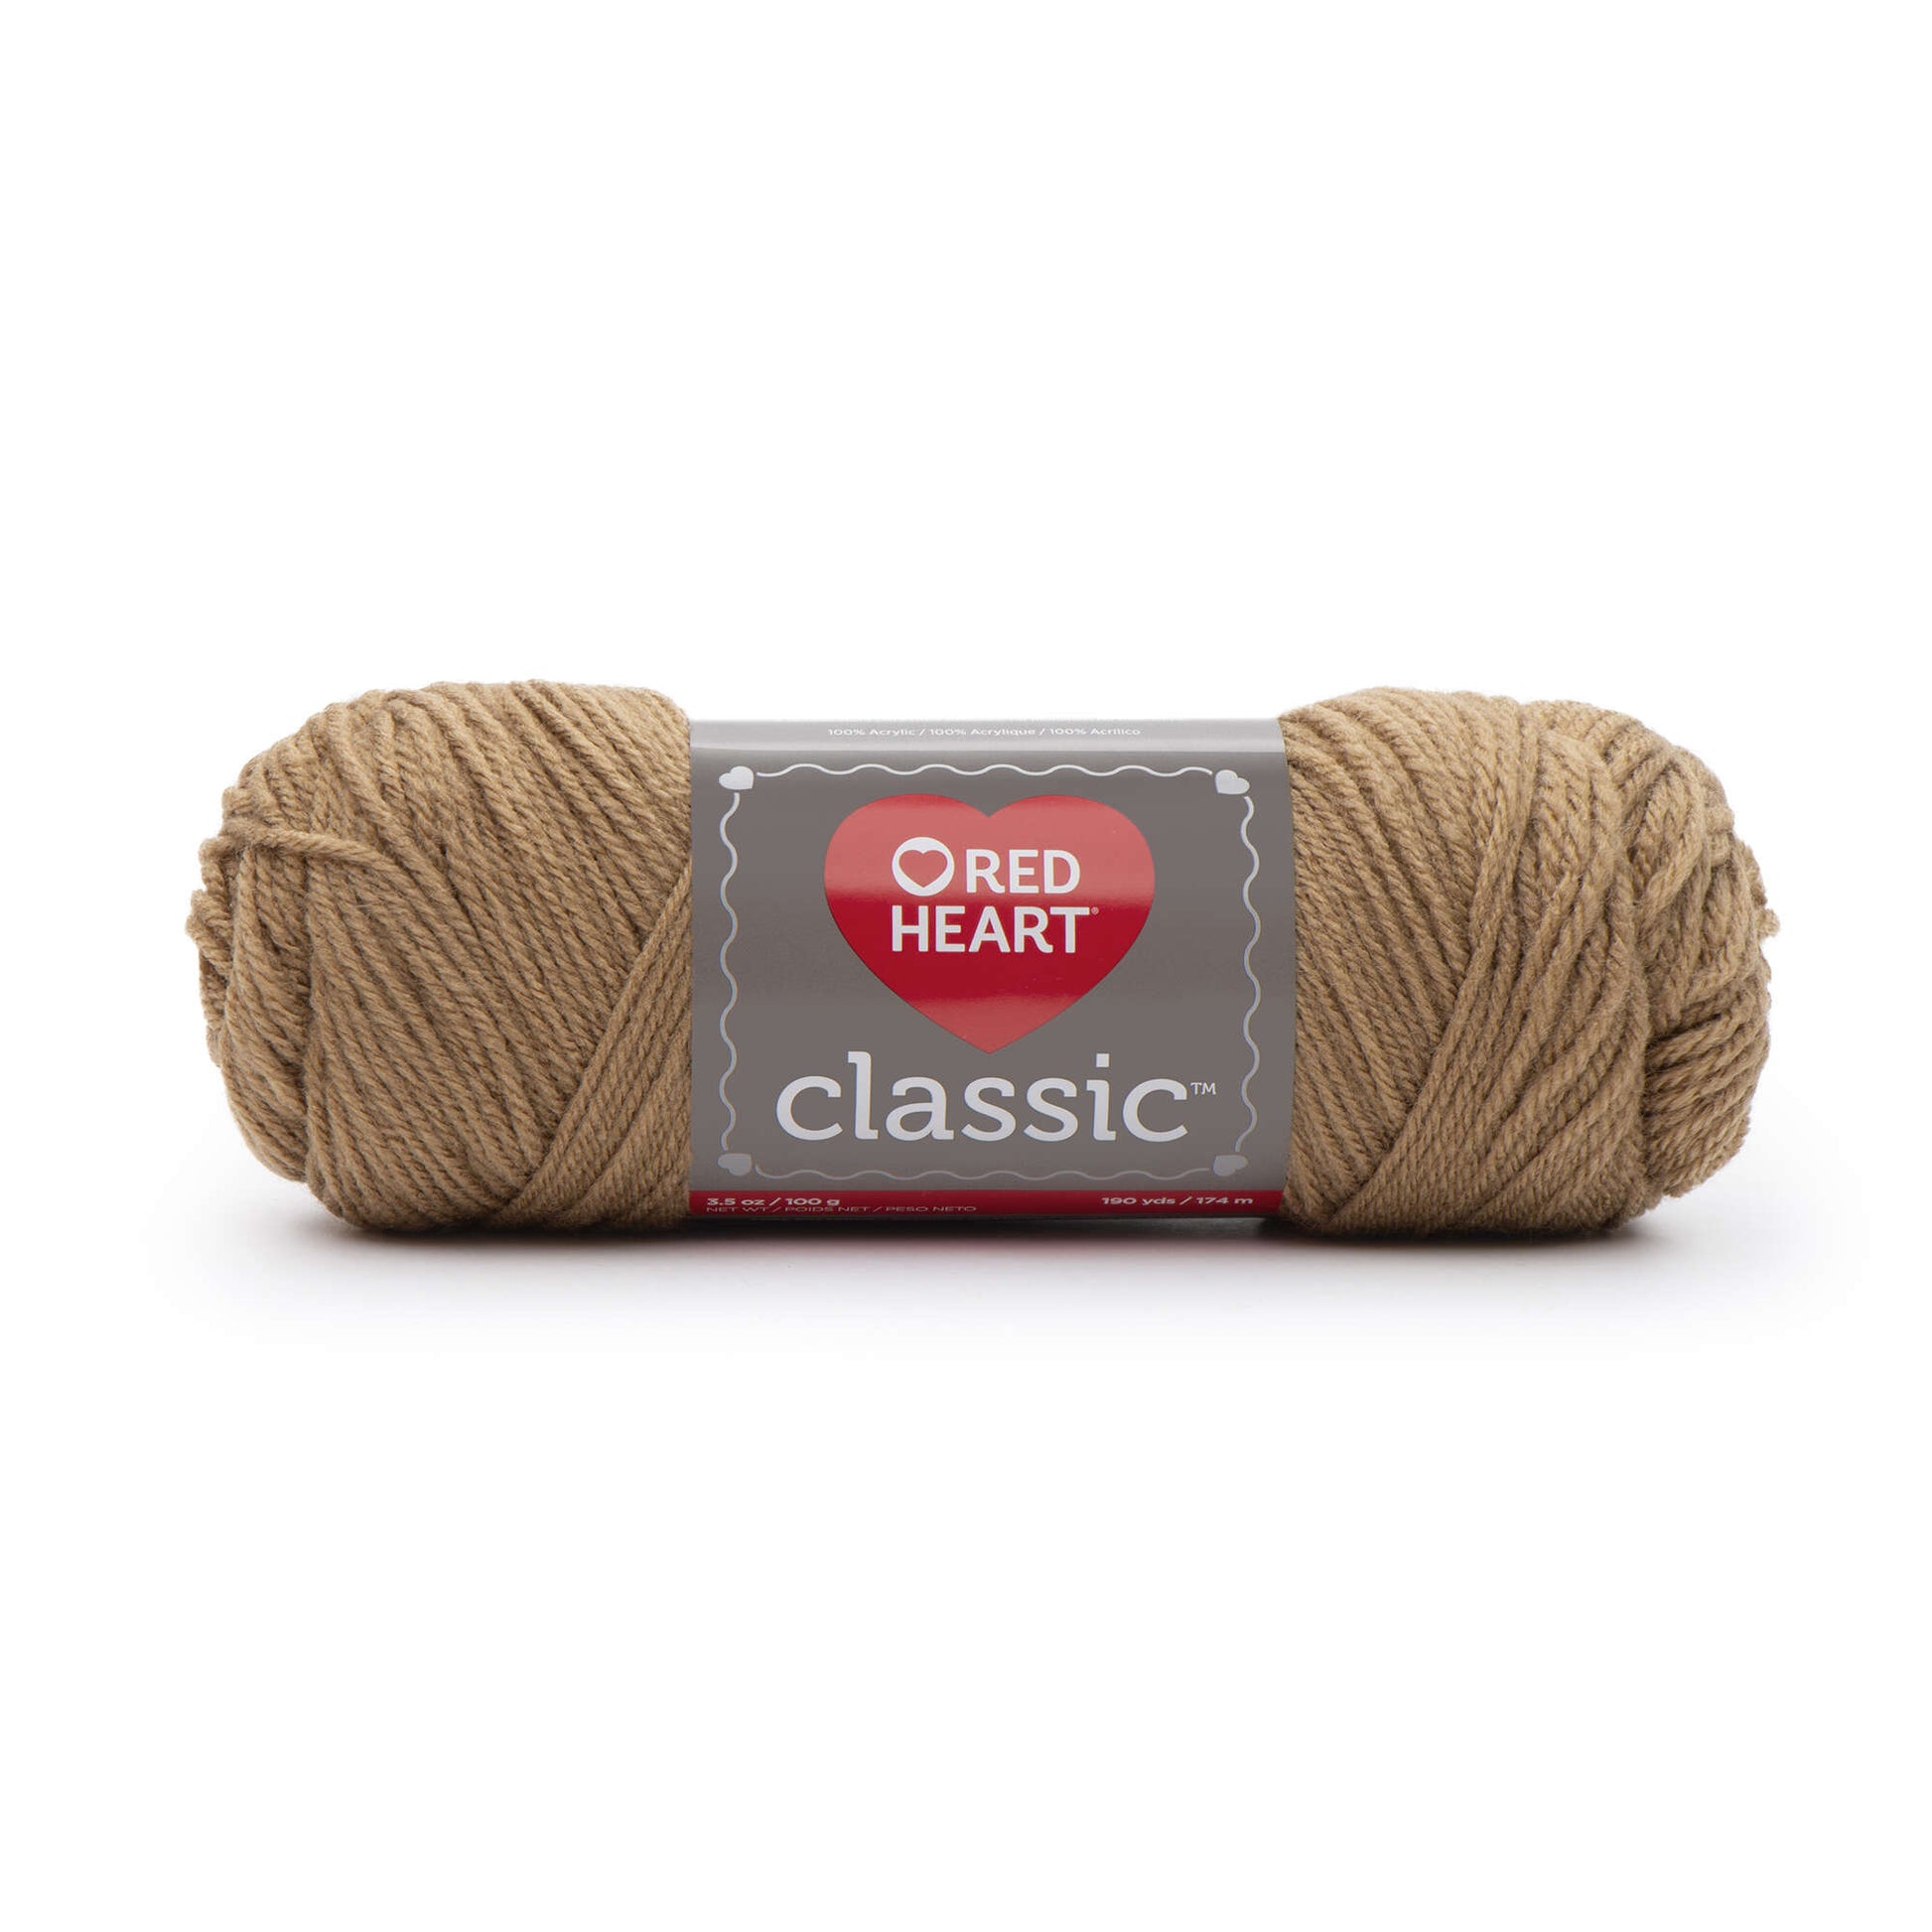 Red Heart Classic Yarn - Clearance shades Warm Brown